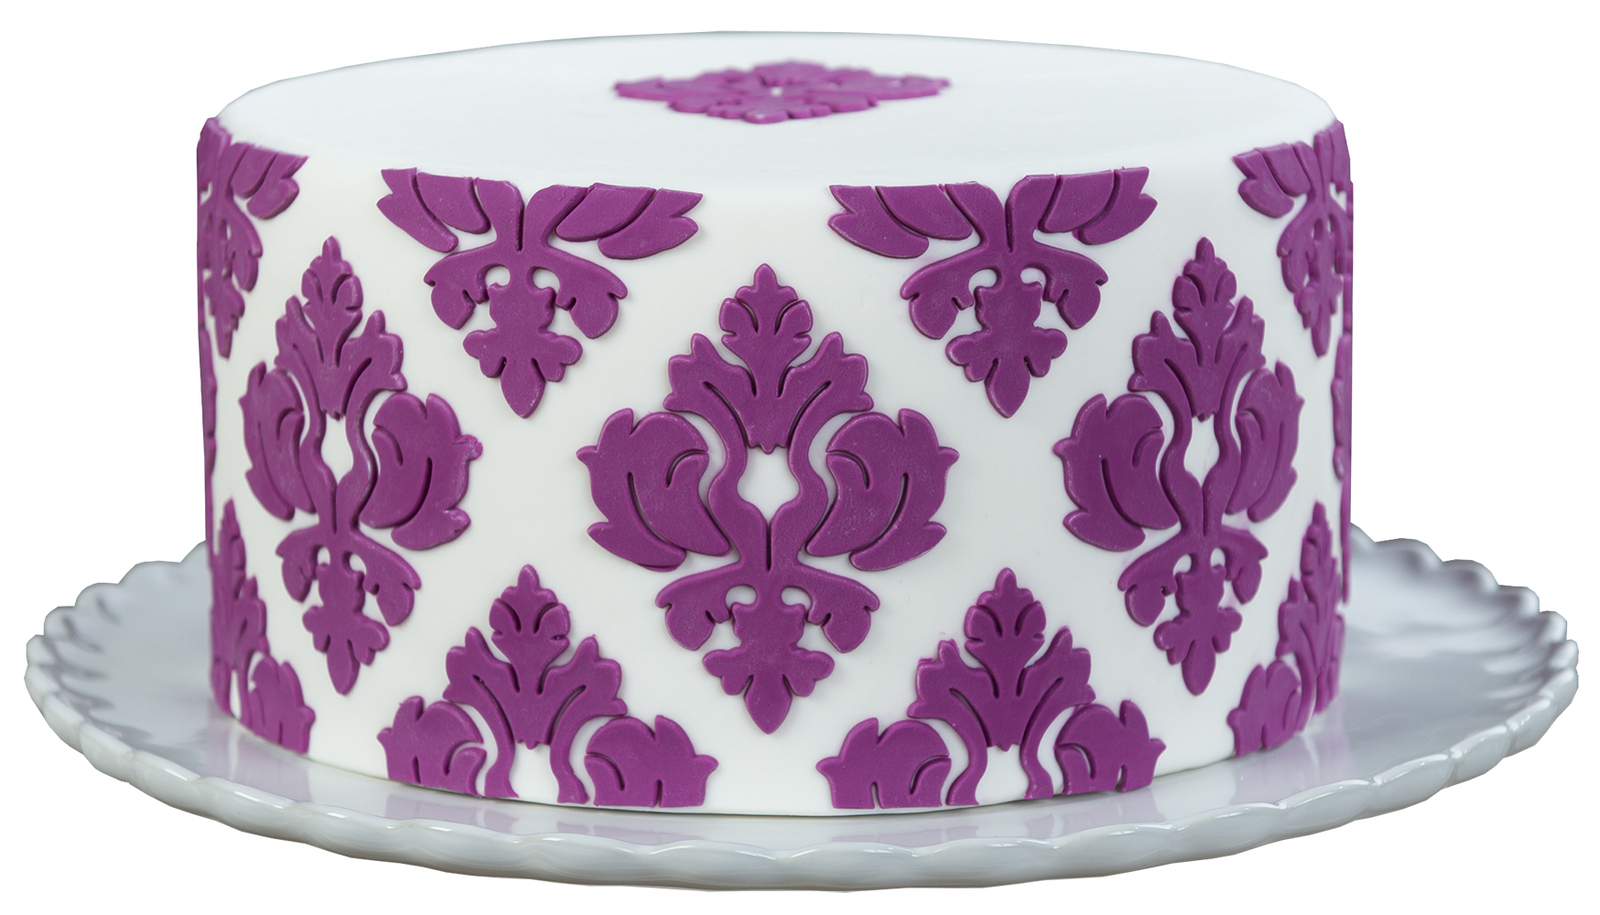 Marvelous Molds Perfect Petal Simpress Silicone Mold | Cake Decorating |  Fondant Gum Paste Icing